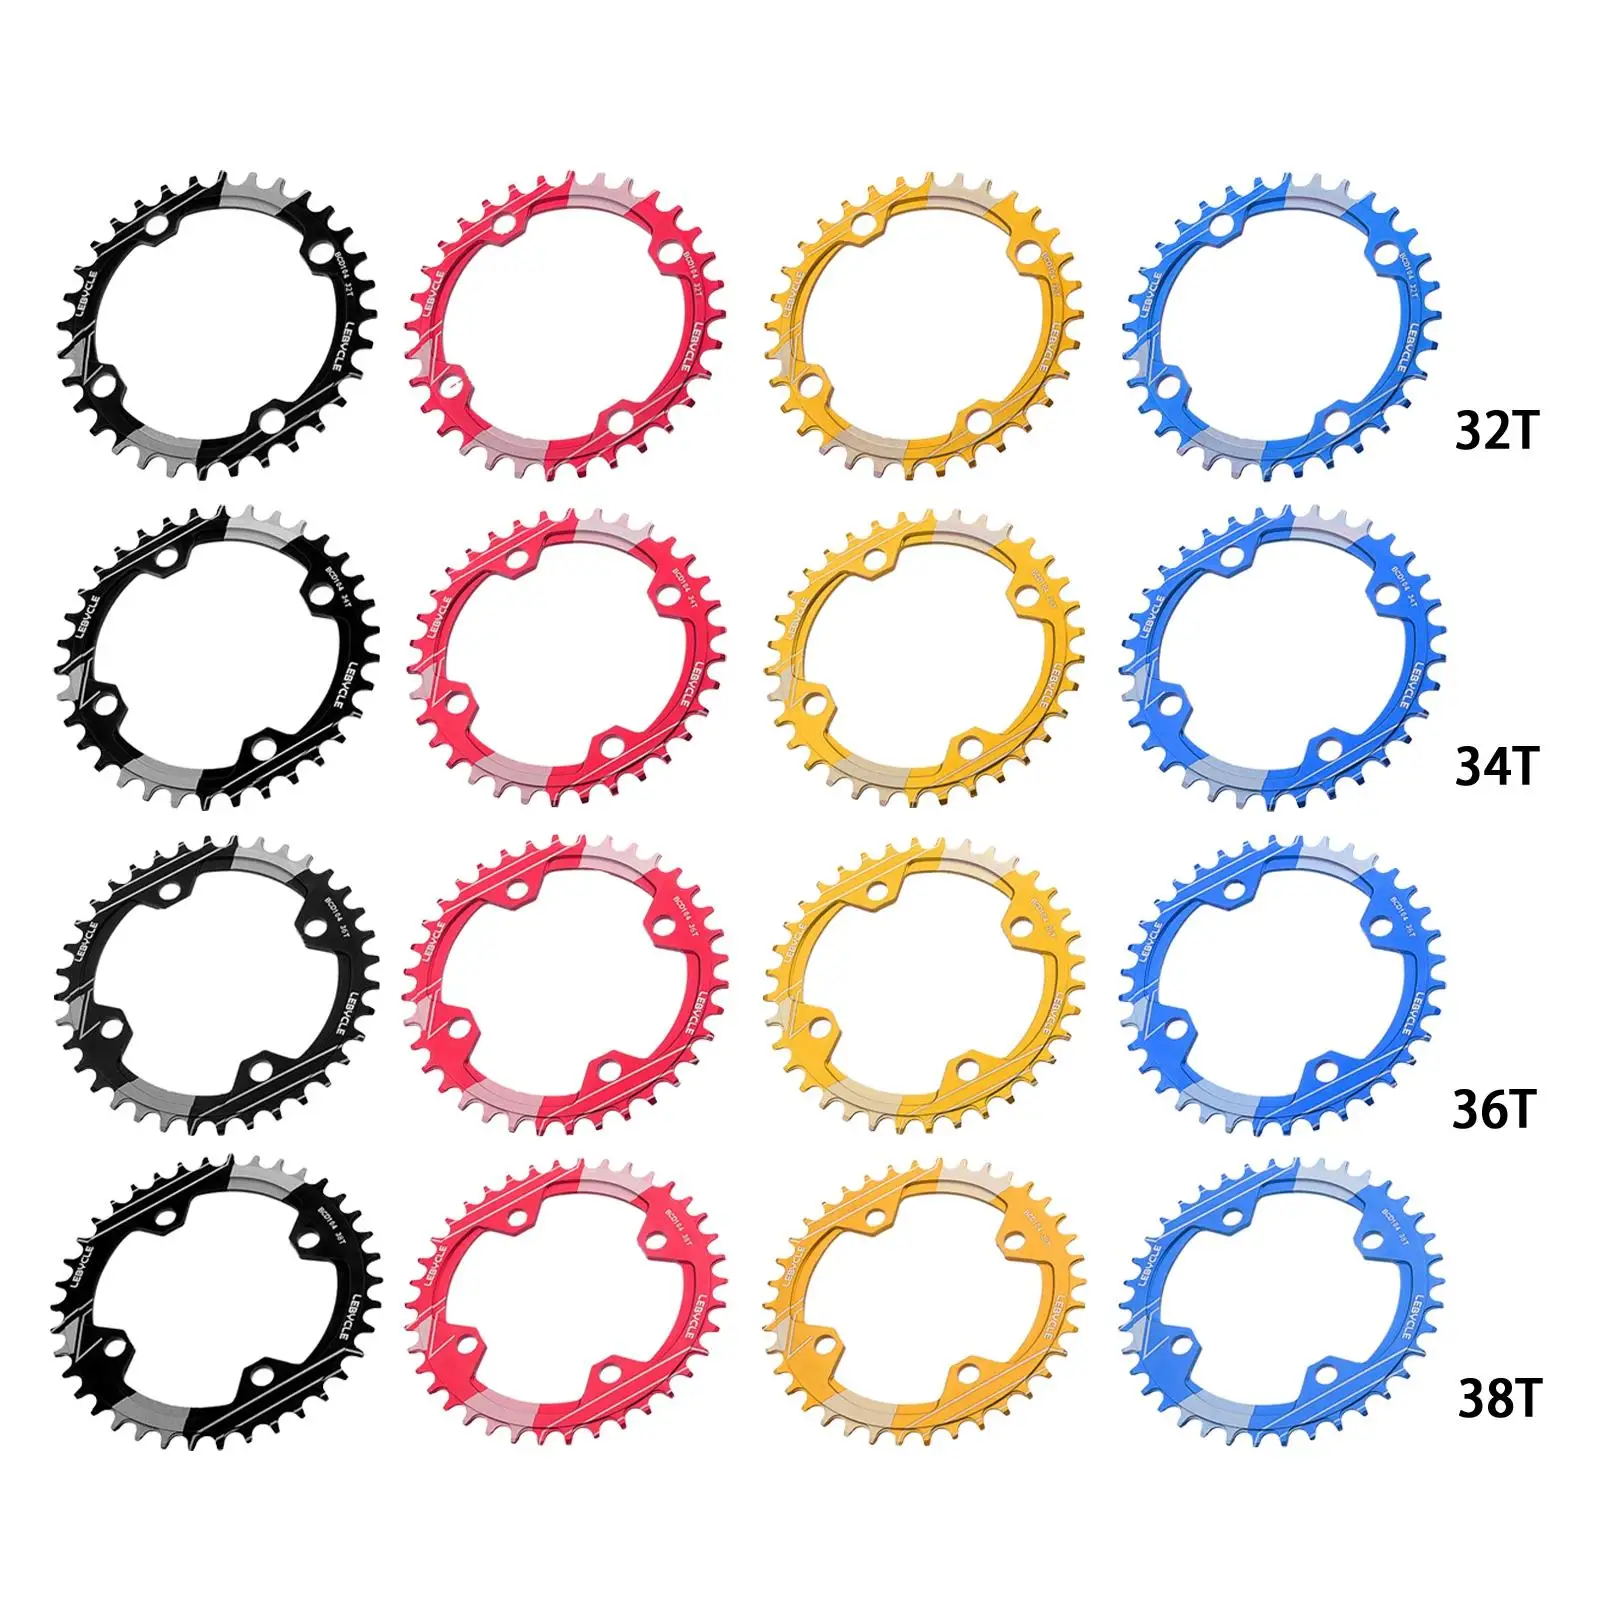 Narrow Wide Chainring 104 BCD Aluminum Chain Rings Bike Chainwheel for MTB